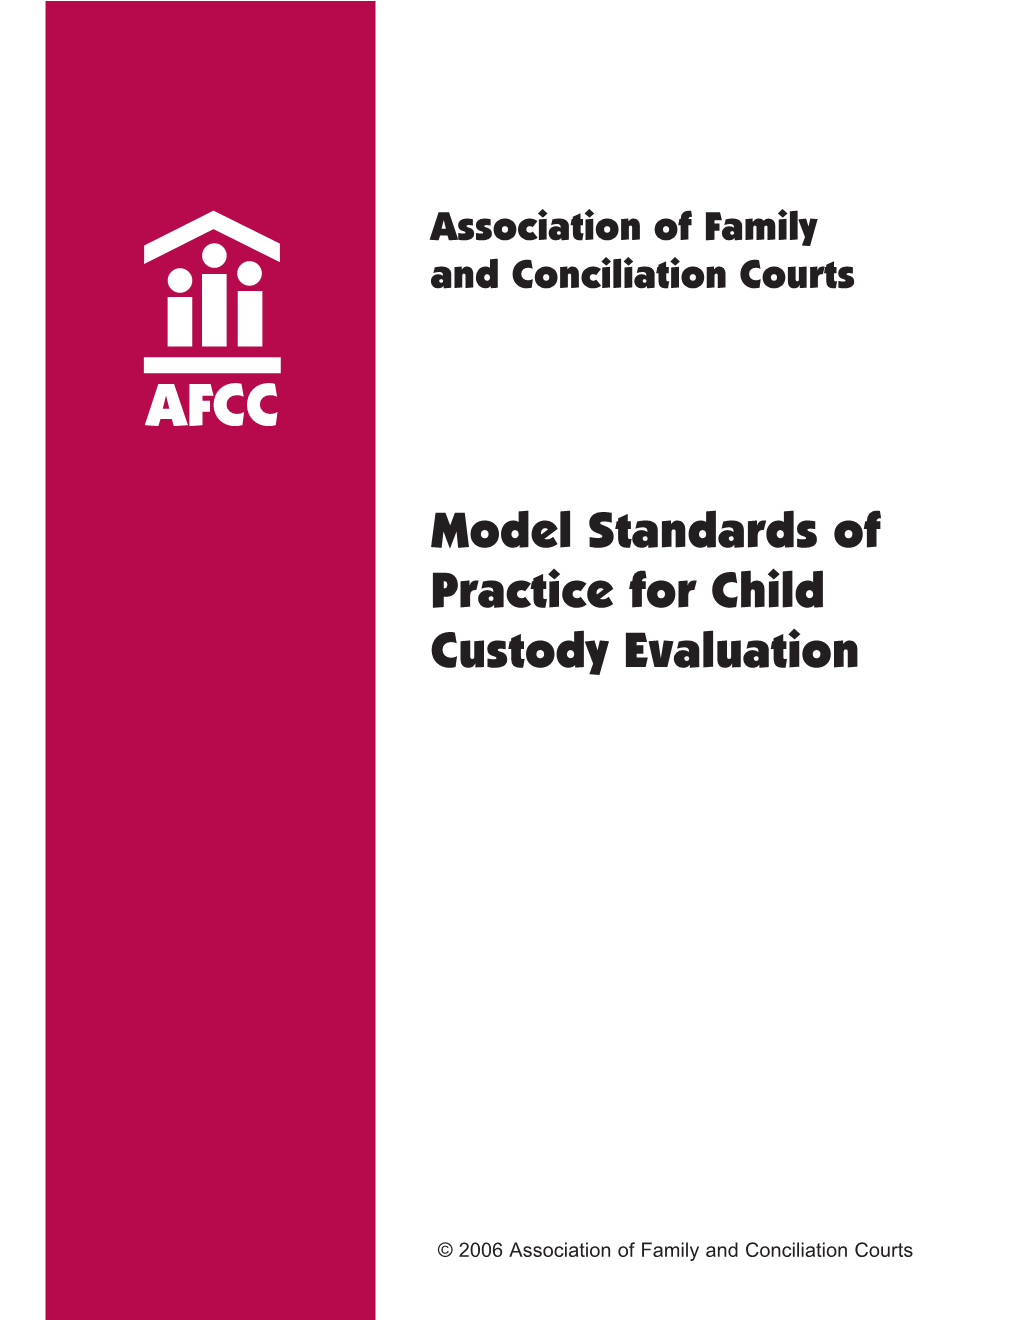 Model Standards of Practice for Child Custody Evaluation (PDF)